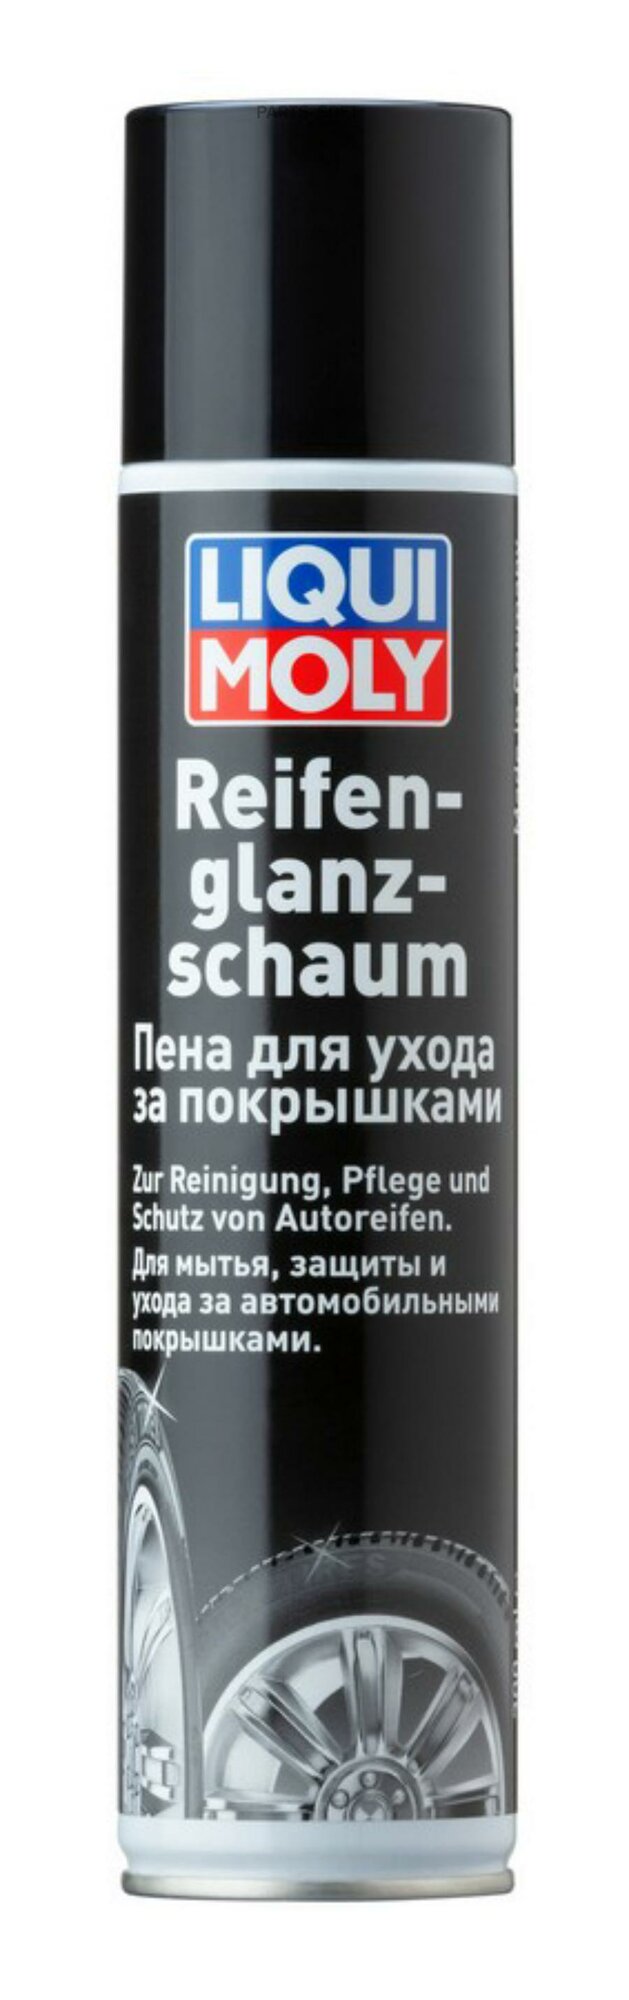 LiquiMoly Reifen-Glanz-Schaum 0.3L_пена для ухода за покрышками !\ LIQUI MOLY / арт. 7601 - (1 шт)